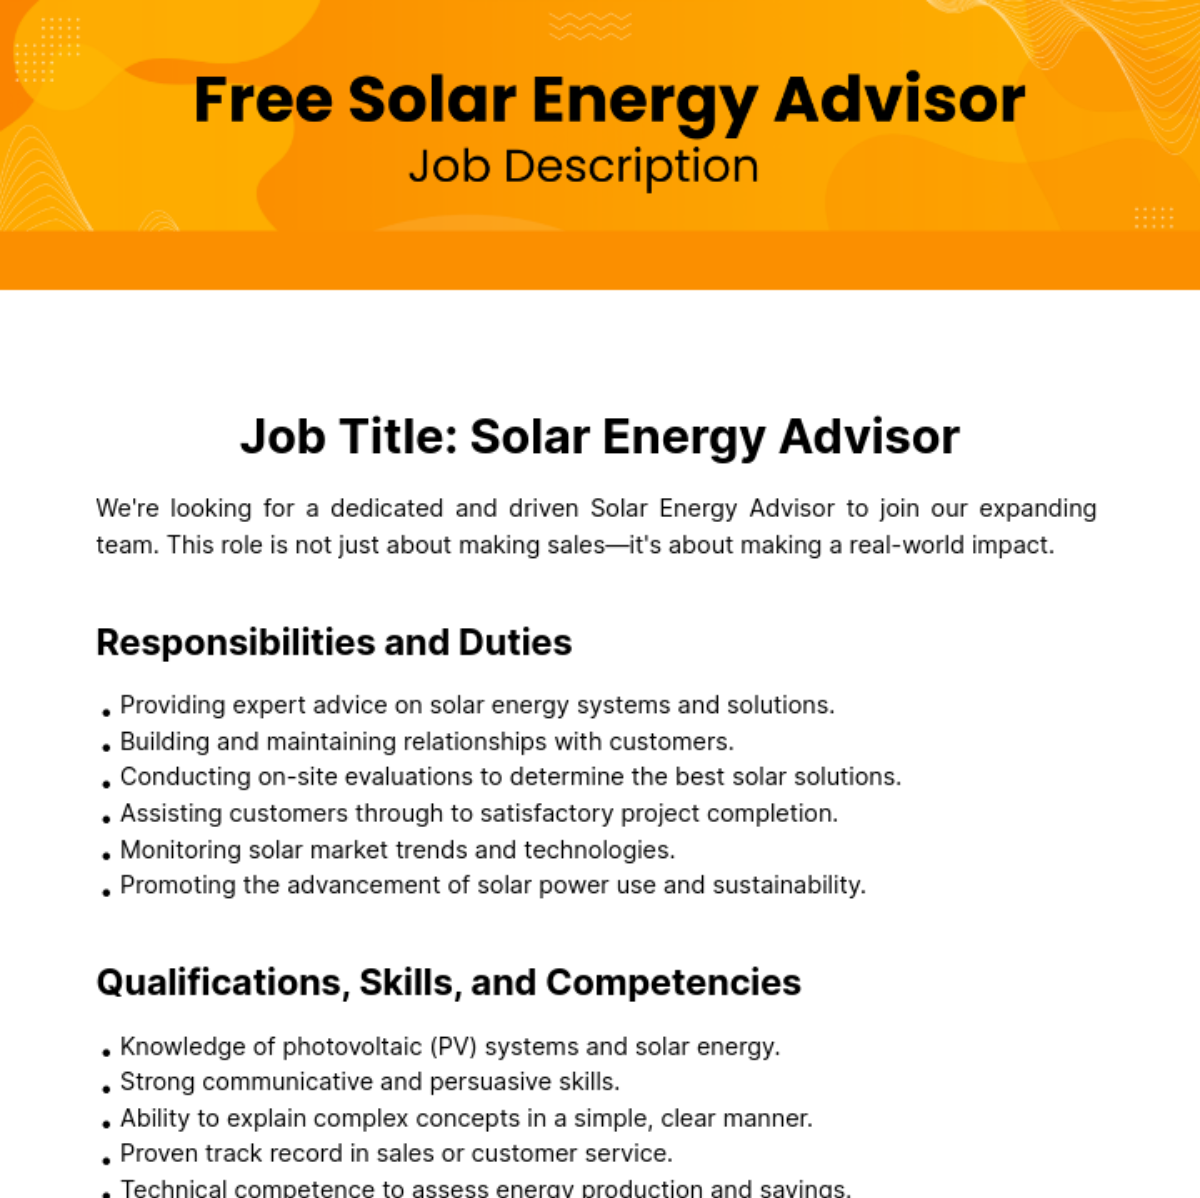 Free Solar Energy Advisor Job Description Template